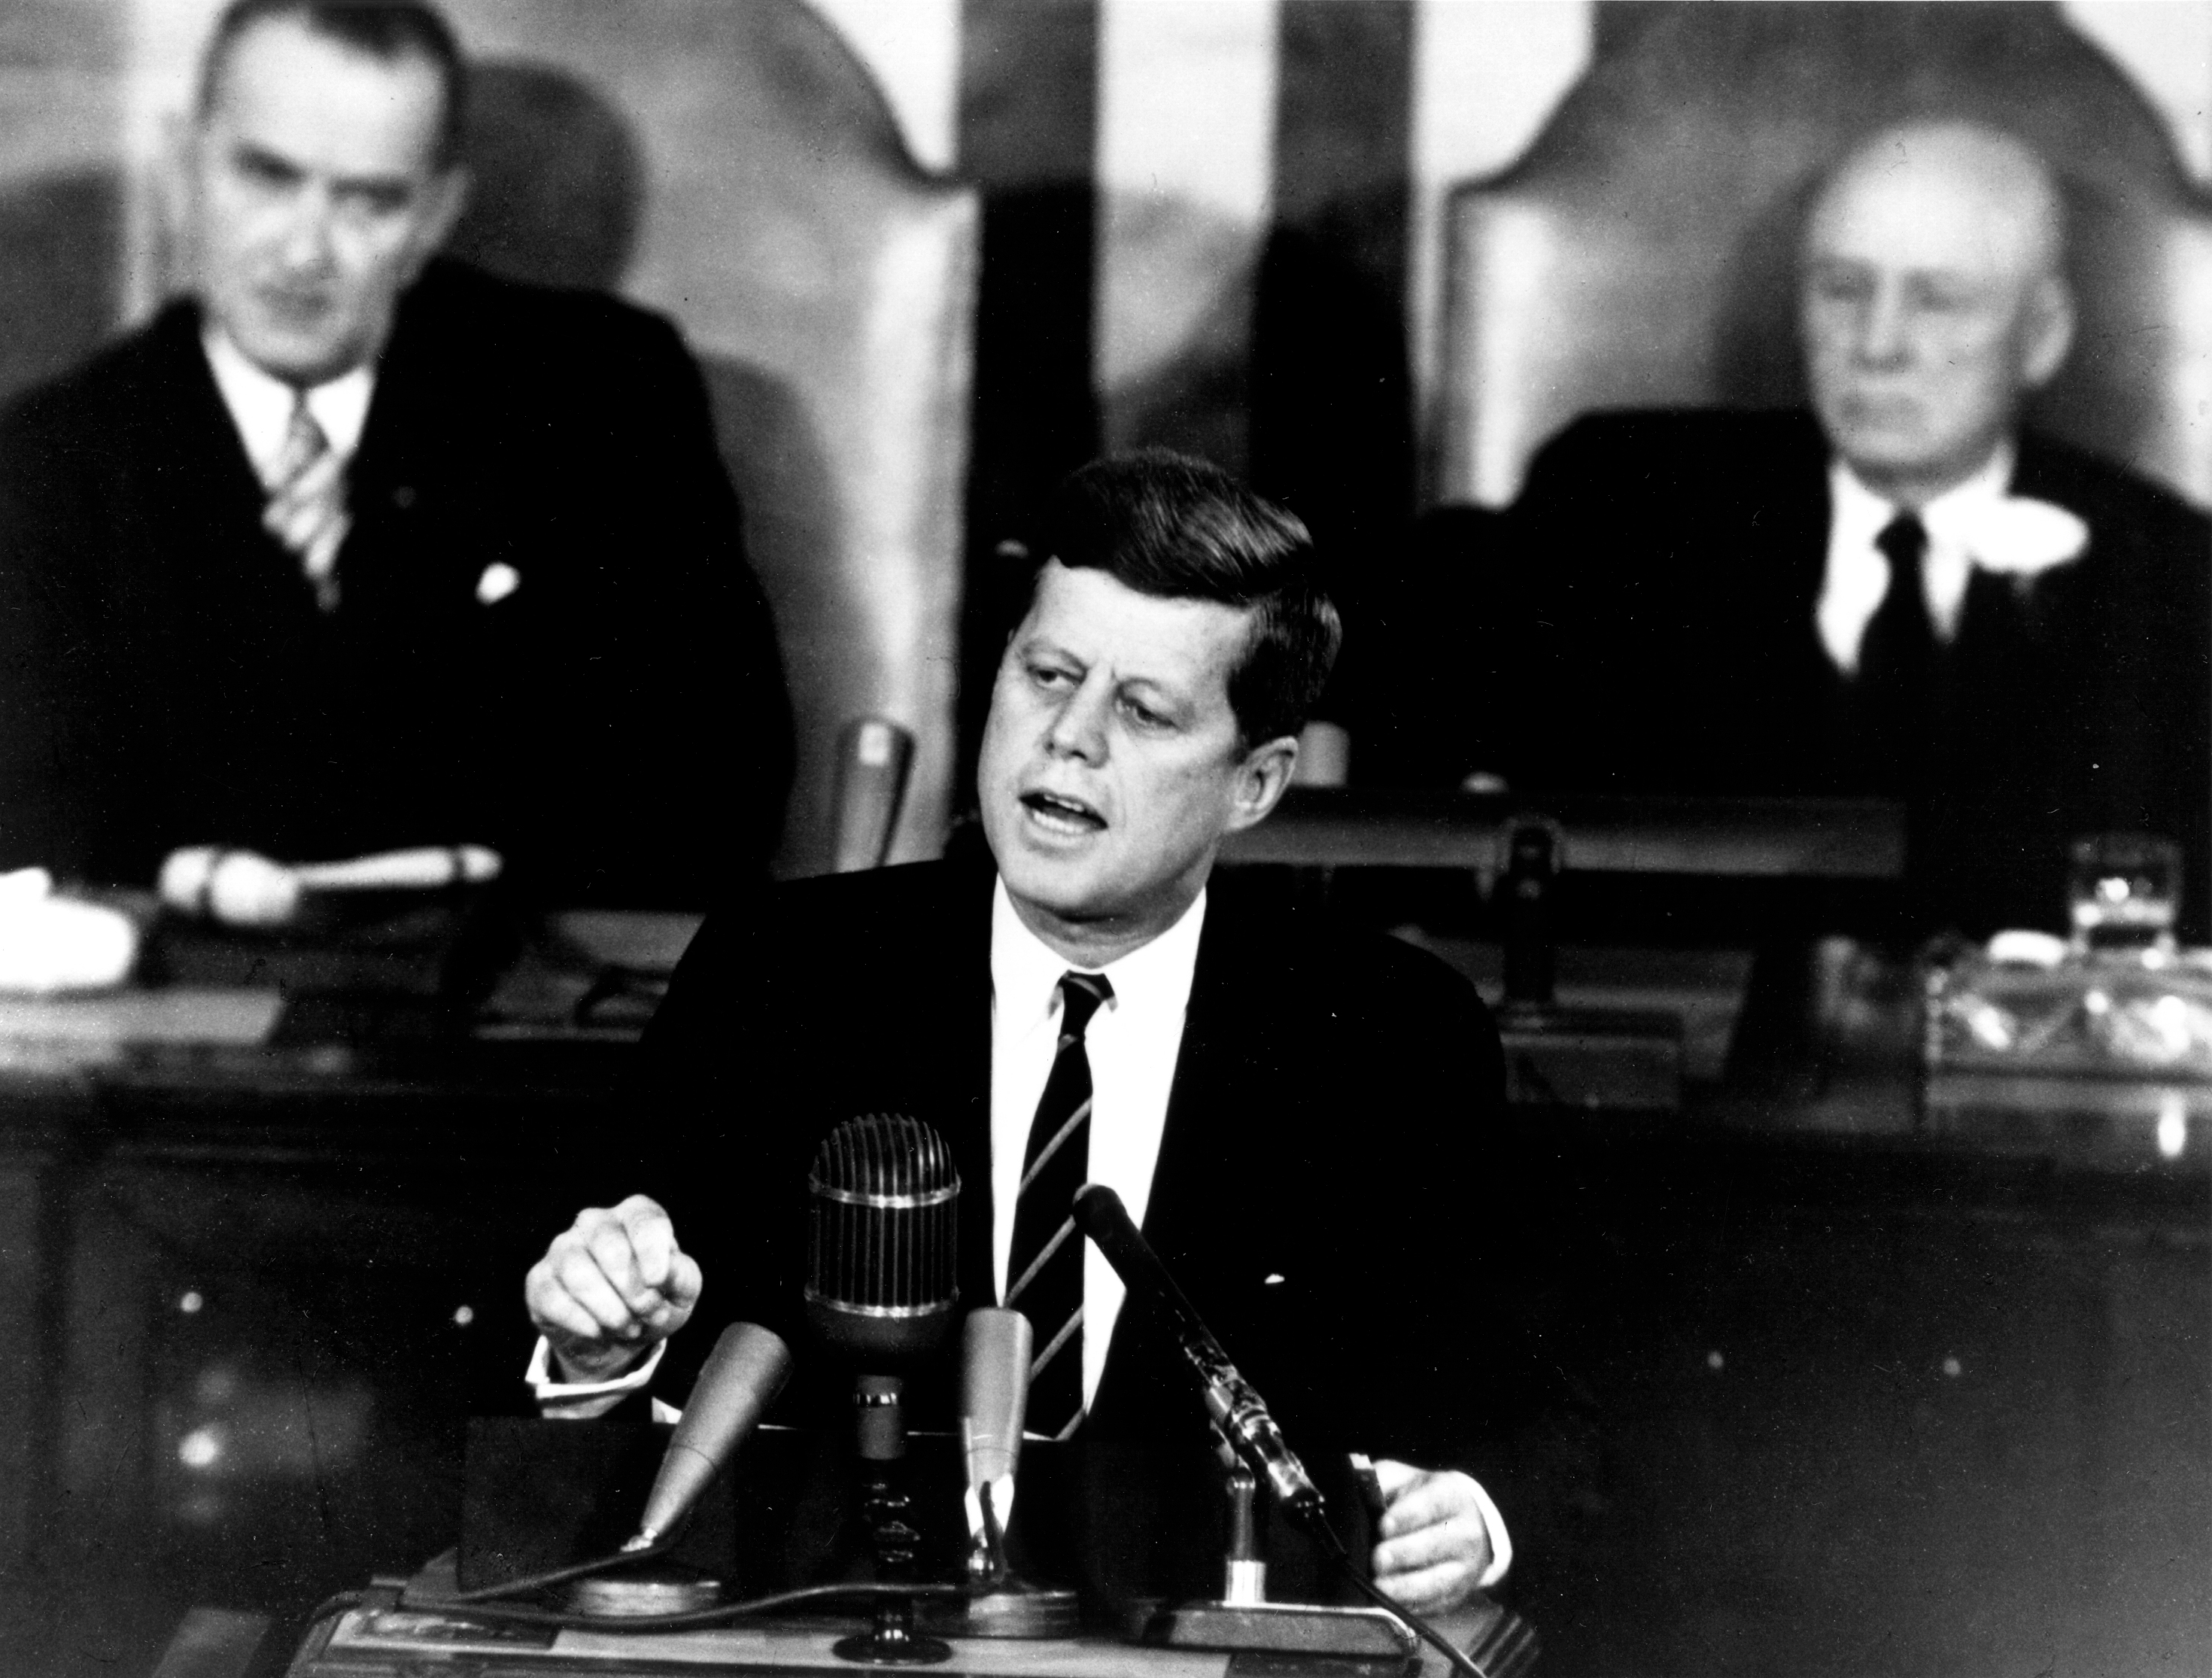 Kennedy Giving Historic Speech to Congress